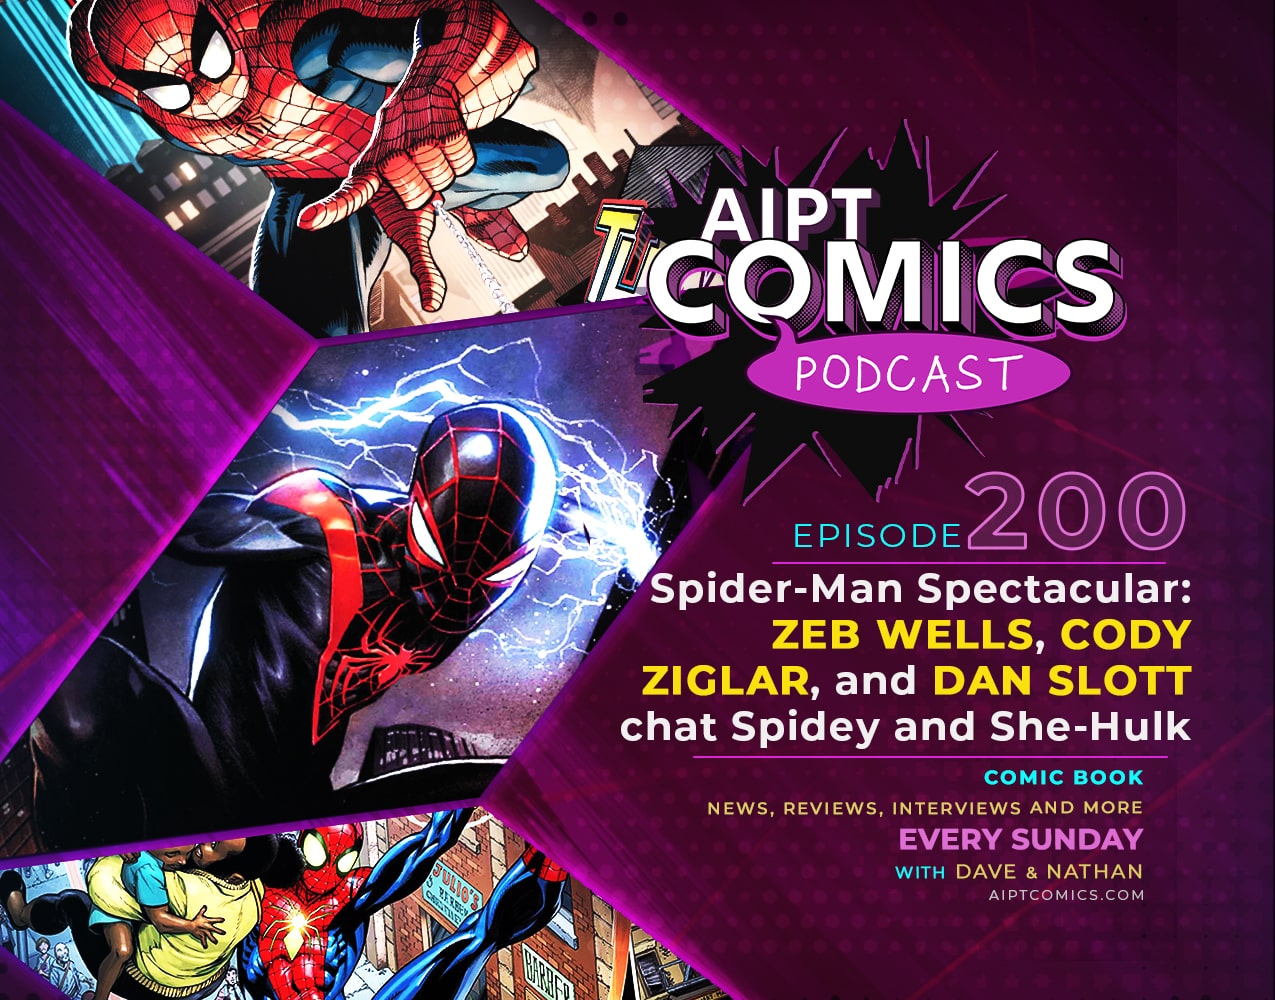 AIPT Comics Podcast episode 200: Spider-Man Spectacular: Zeb Wells, Cody Ziglar, and Dan Slott chat Spidey and She-Hulk too